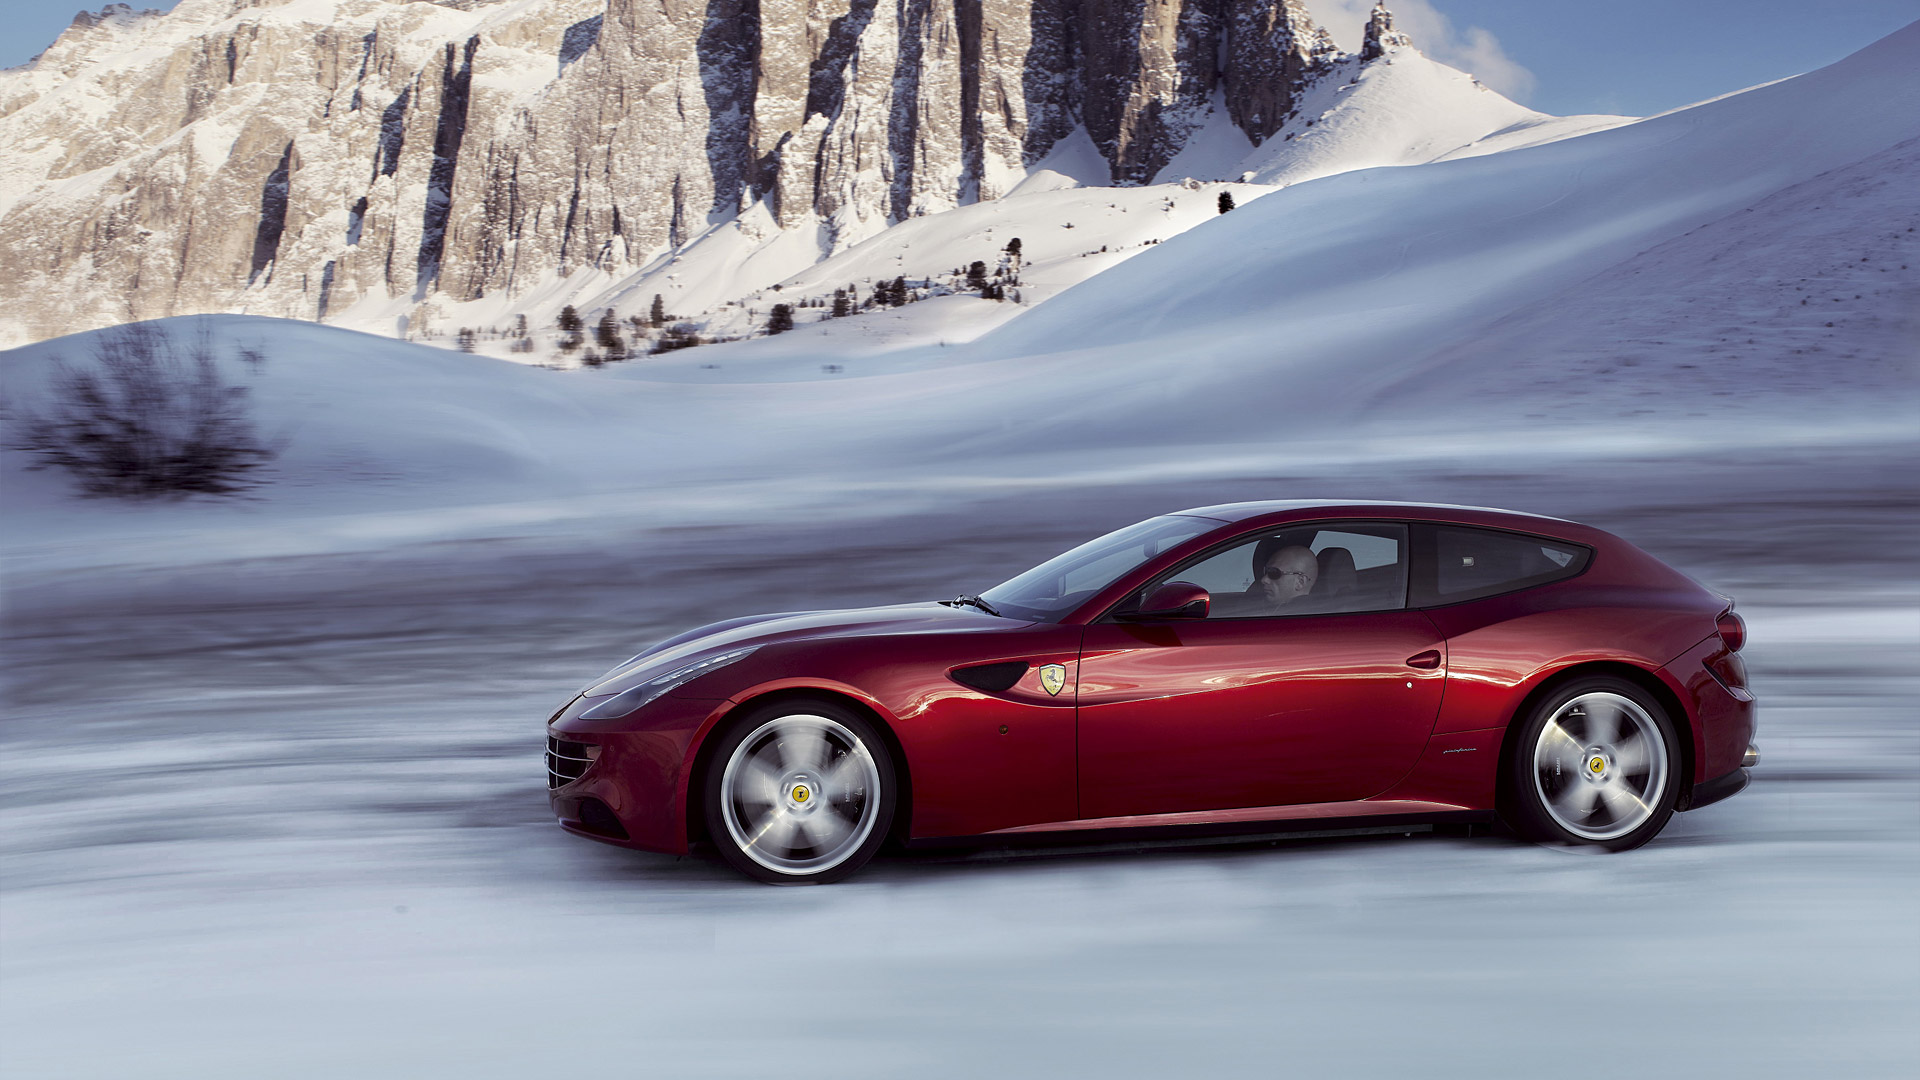  2012 Ferrari FF Wallpaper.